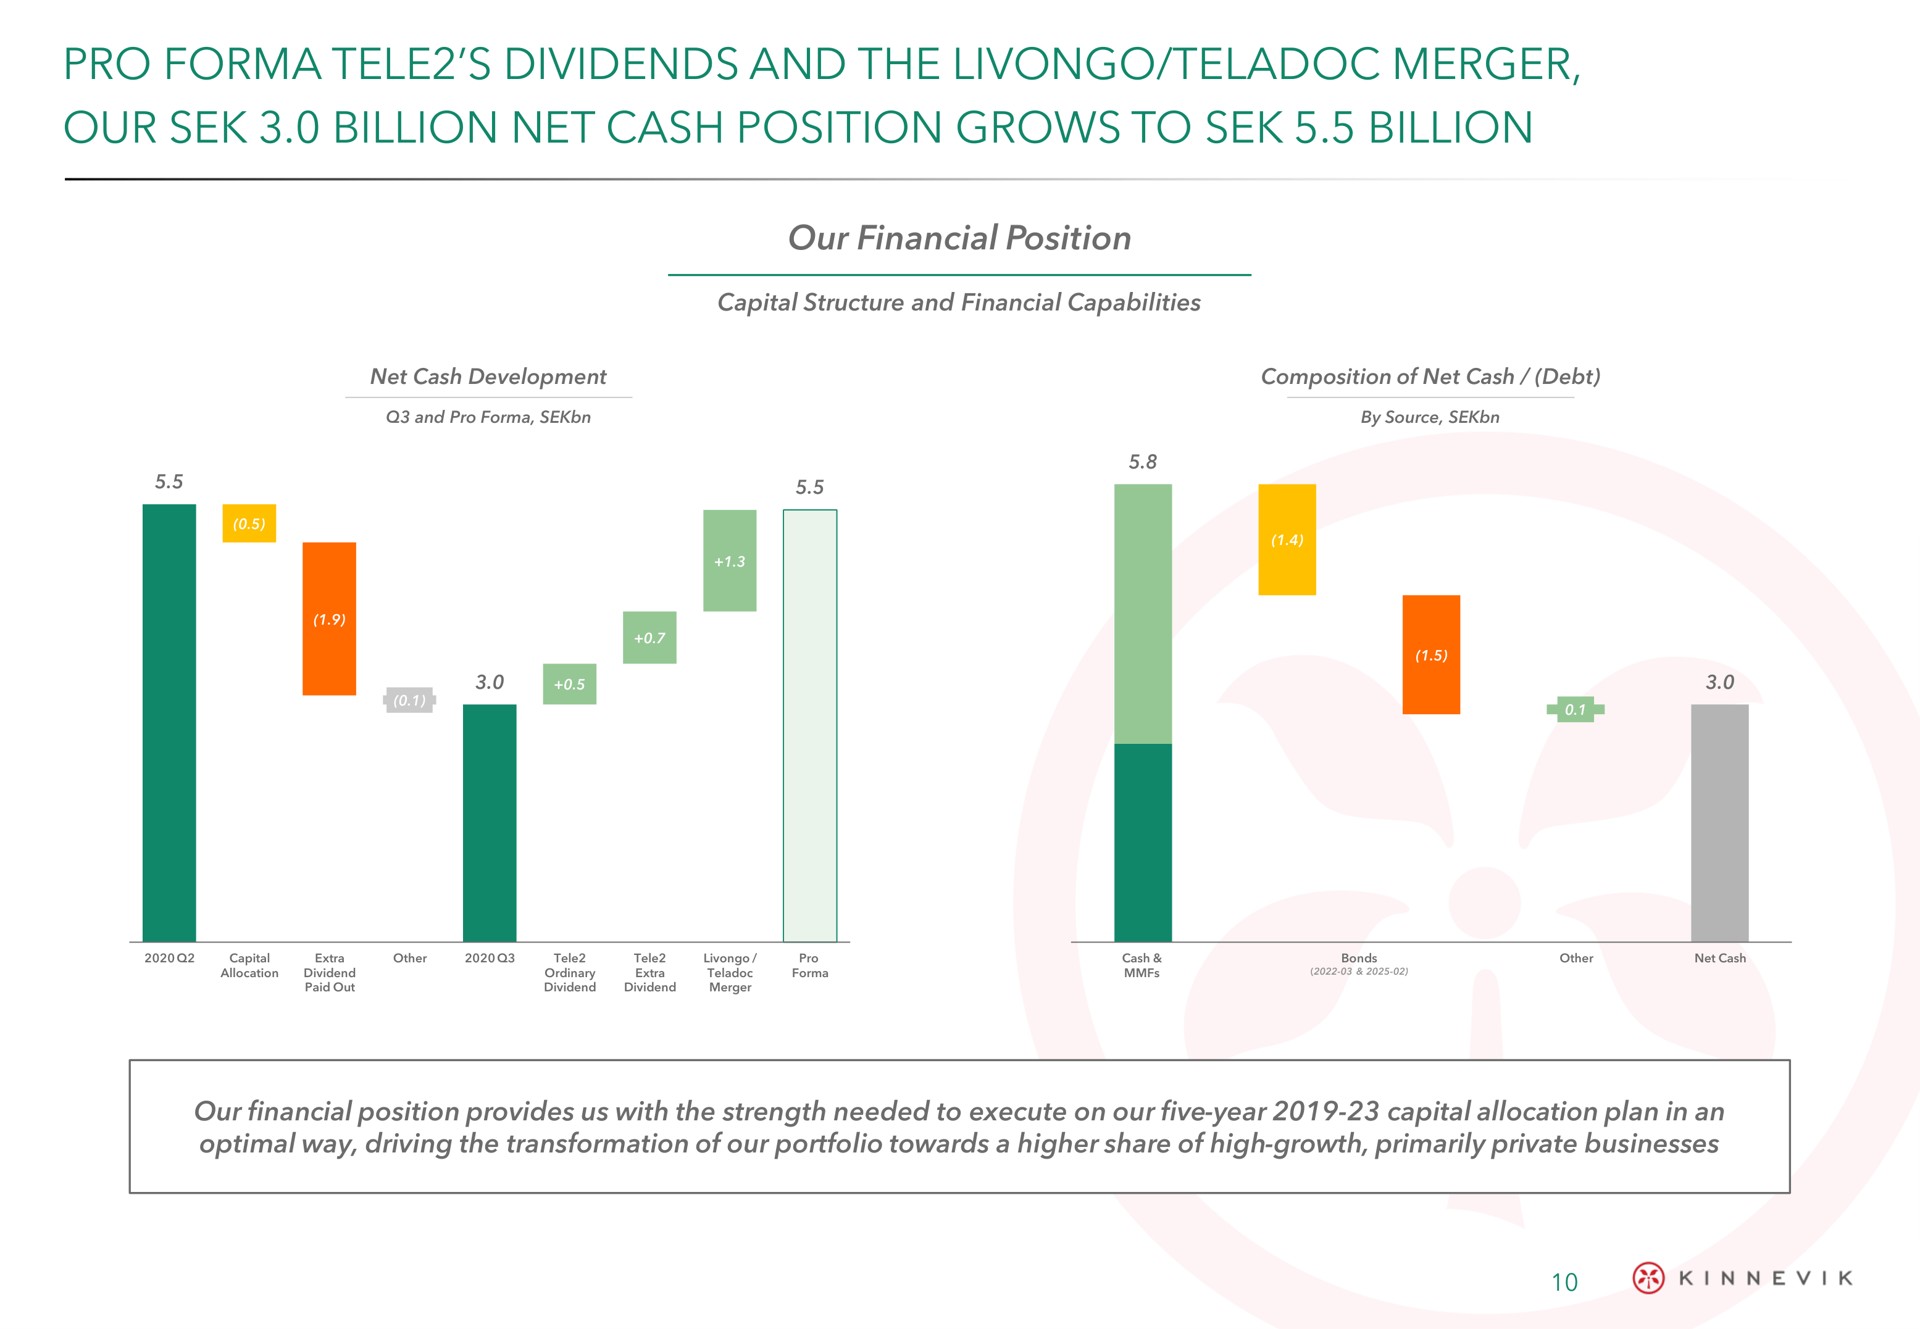 pro tele dividends and the merger our billion net cash position grows to billion | Kinnevik